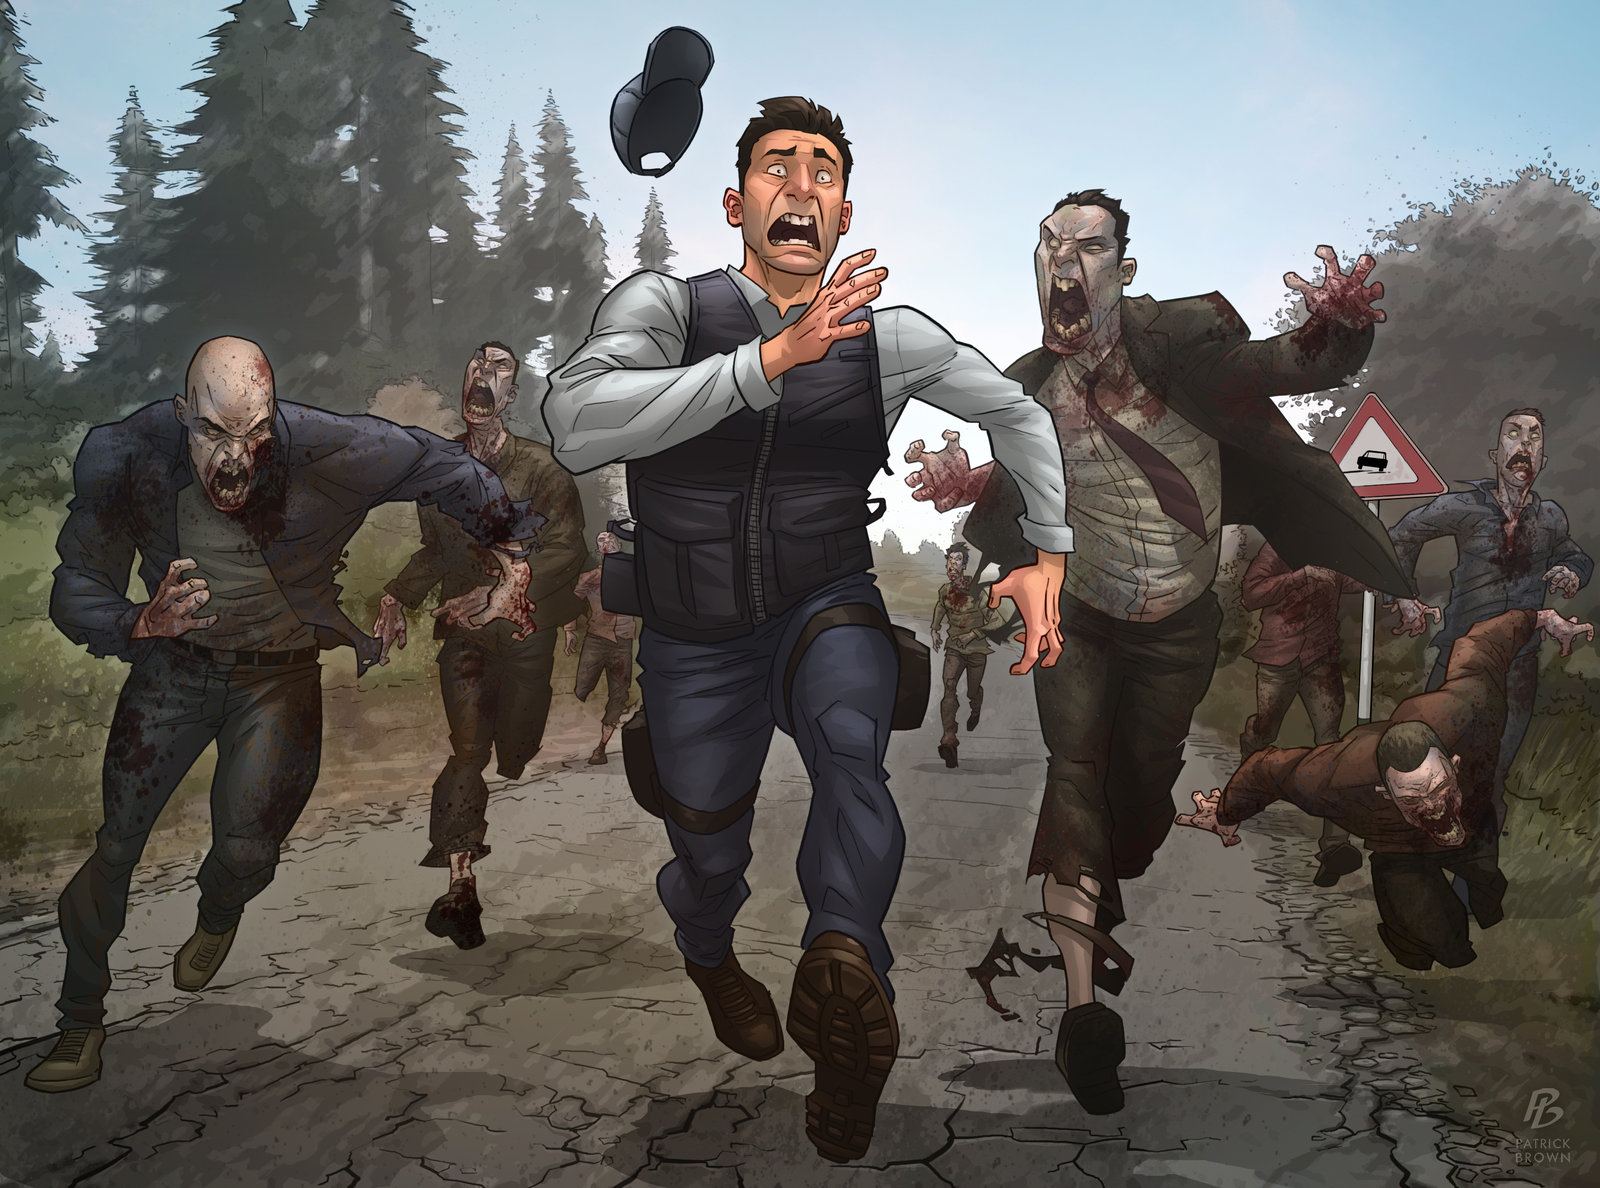 DayZ zombie apocalypse mod to get full standalone game treatment